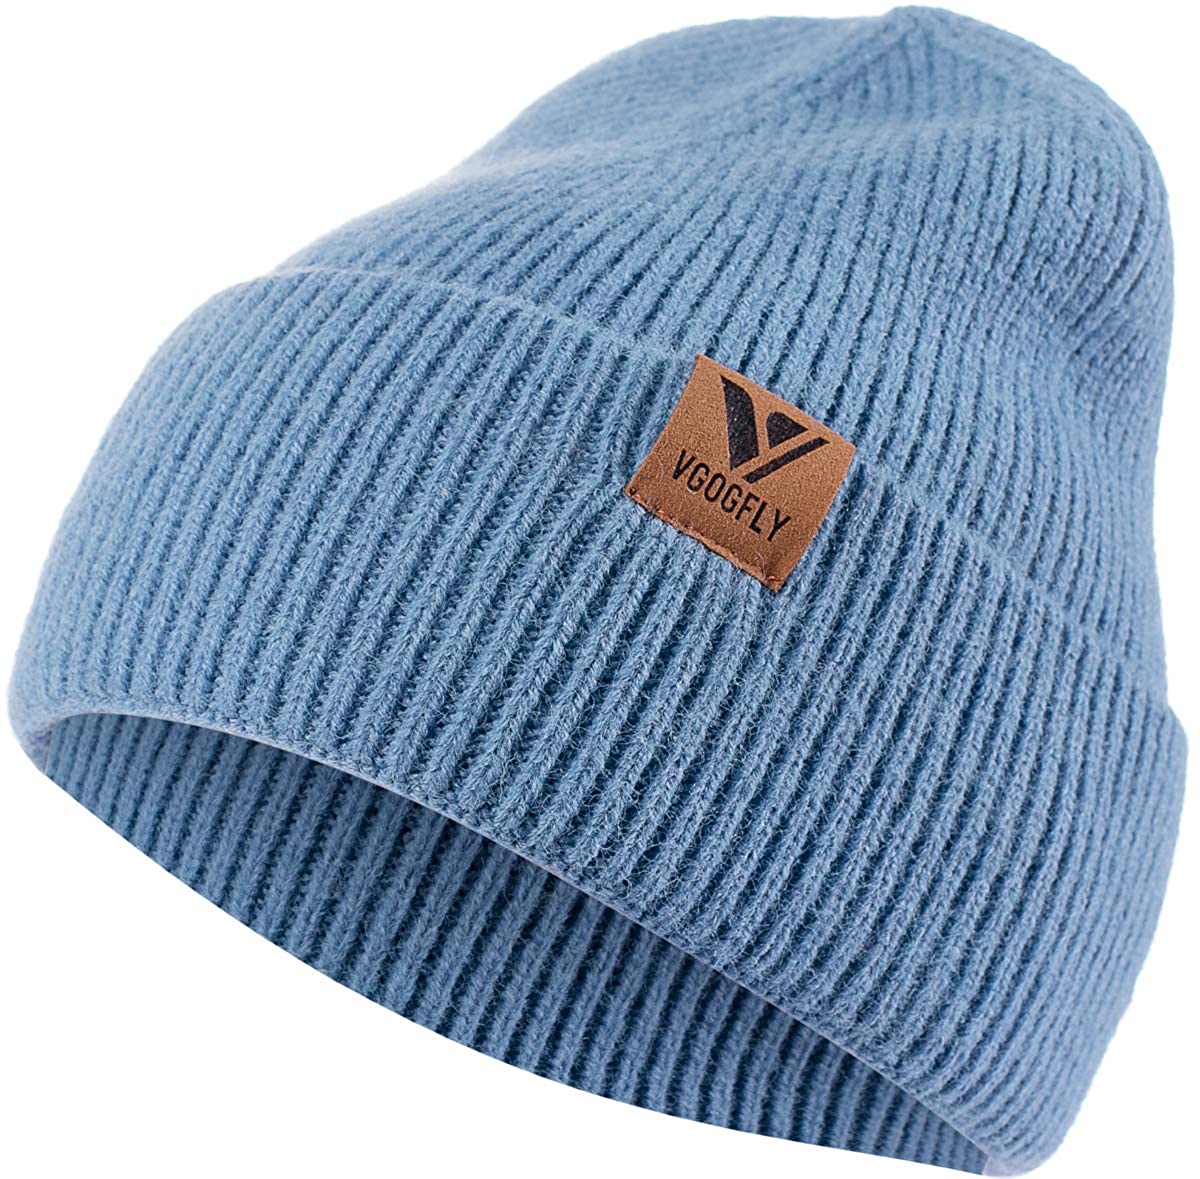 Vgogfly Lined Men Beanie Slouchy Knit Skull Cap Warm Stocking Hats Guys Women Striped Winter Beanie Hat